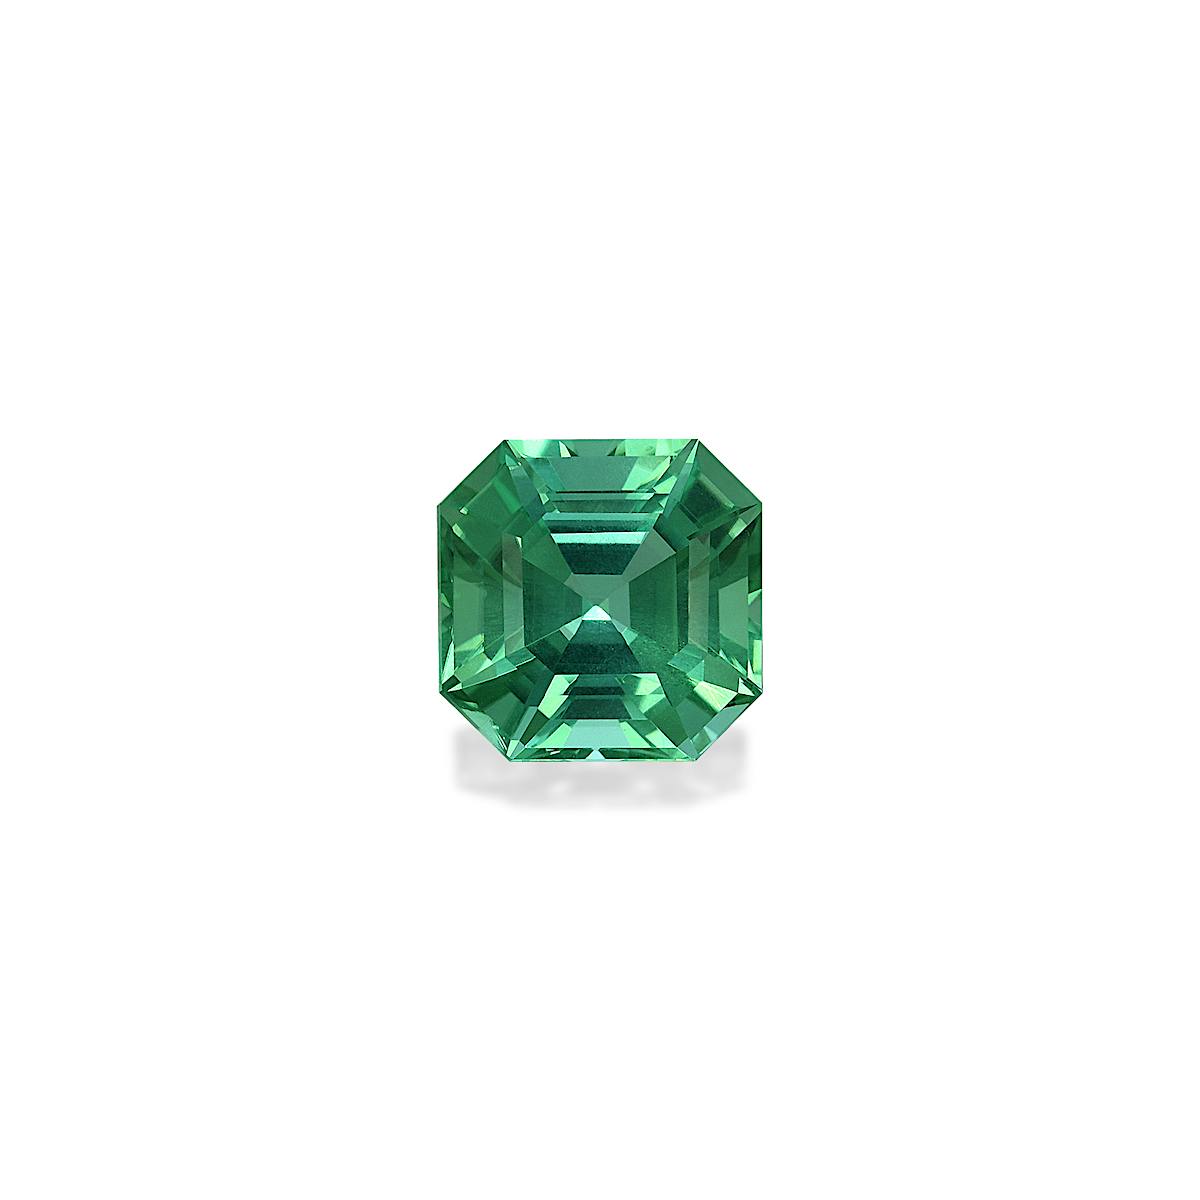 Green Tourmaline 7.67ct - Main Image